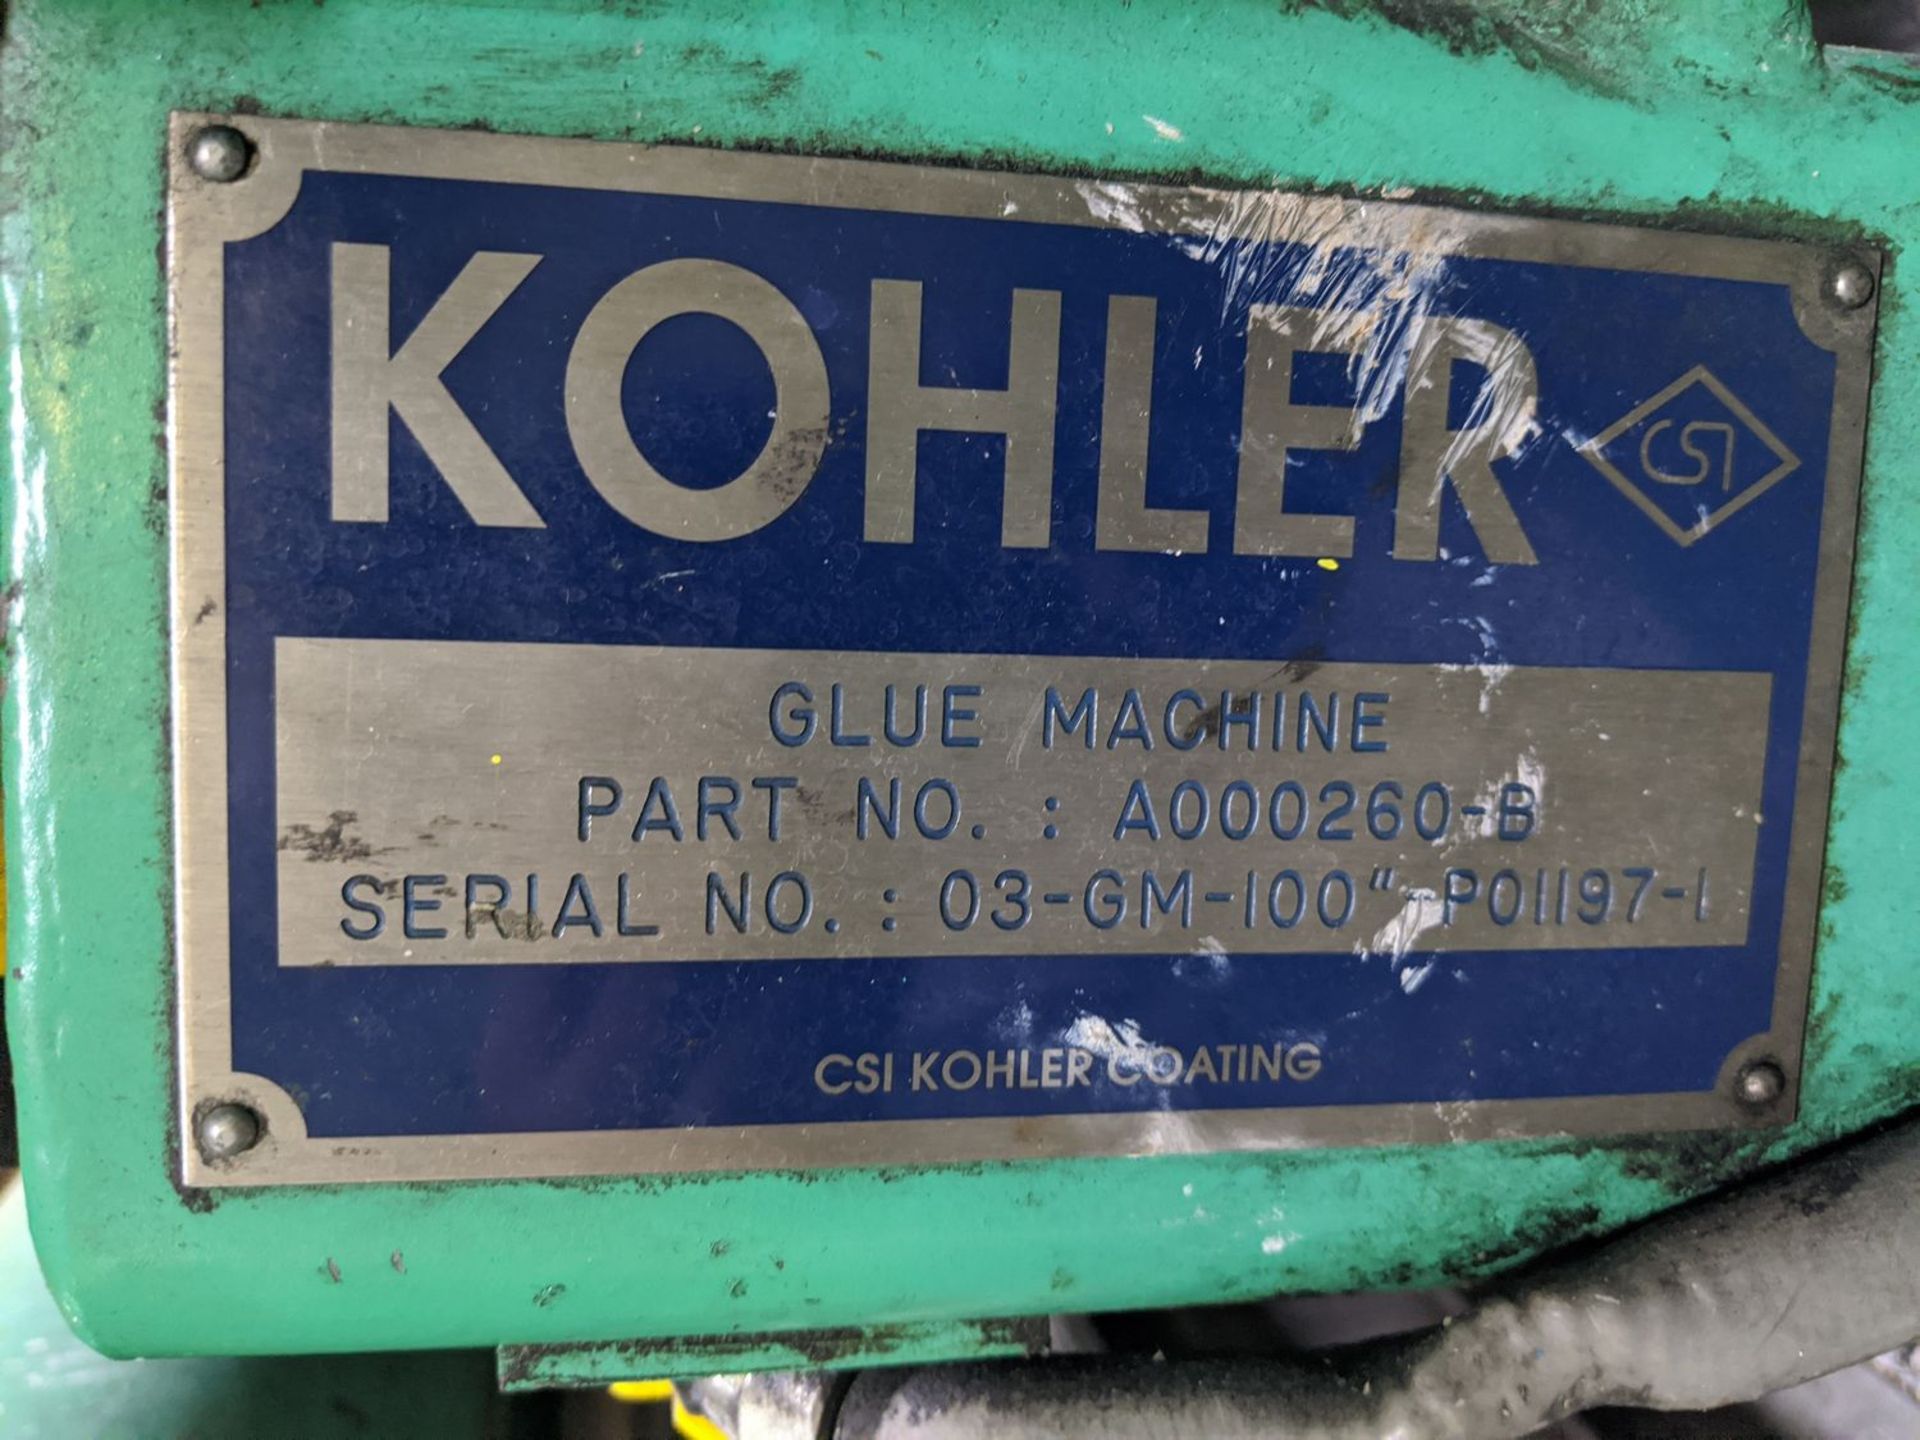 Kohler Mdl: A000260-B Glue Machine, (Loc. Pico Rivera), S/N: 03-GM-100"-PP01197-1 - Image 6 of 6